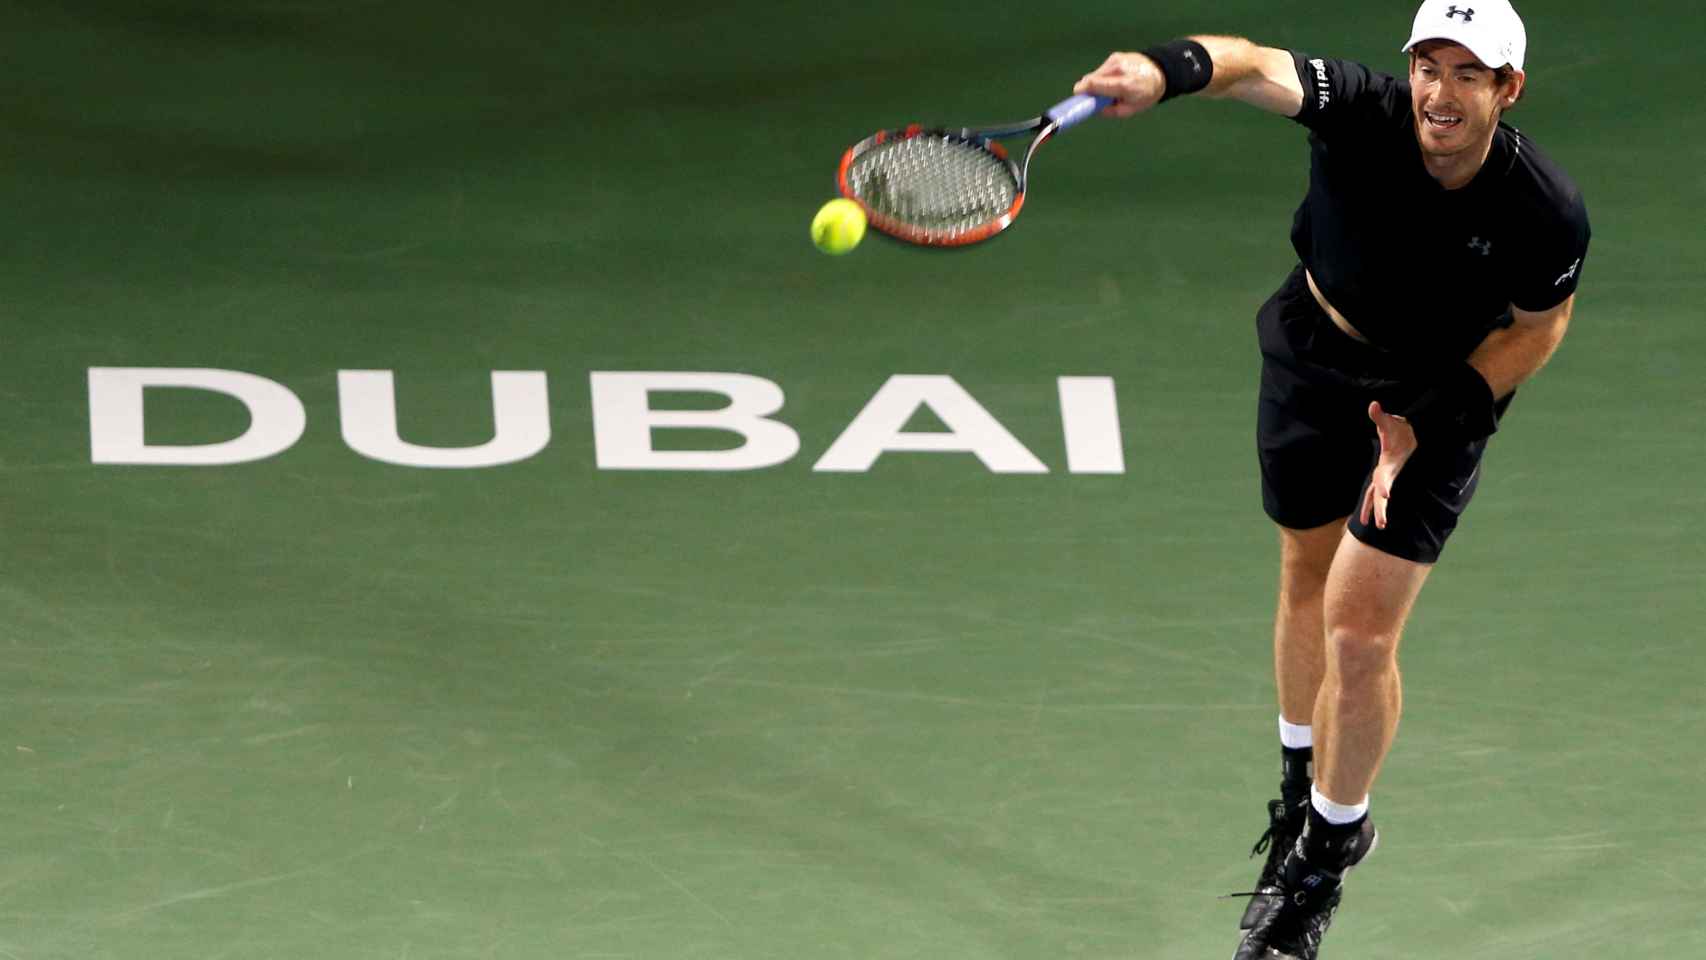 Andy Murray en pleno golpeo de la pelota en la final de Dubái.